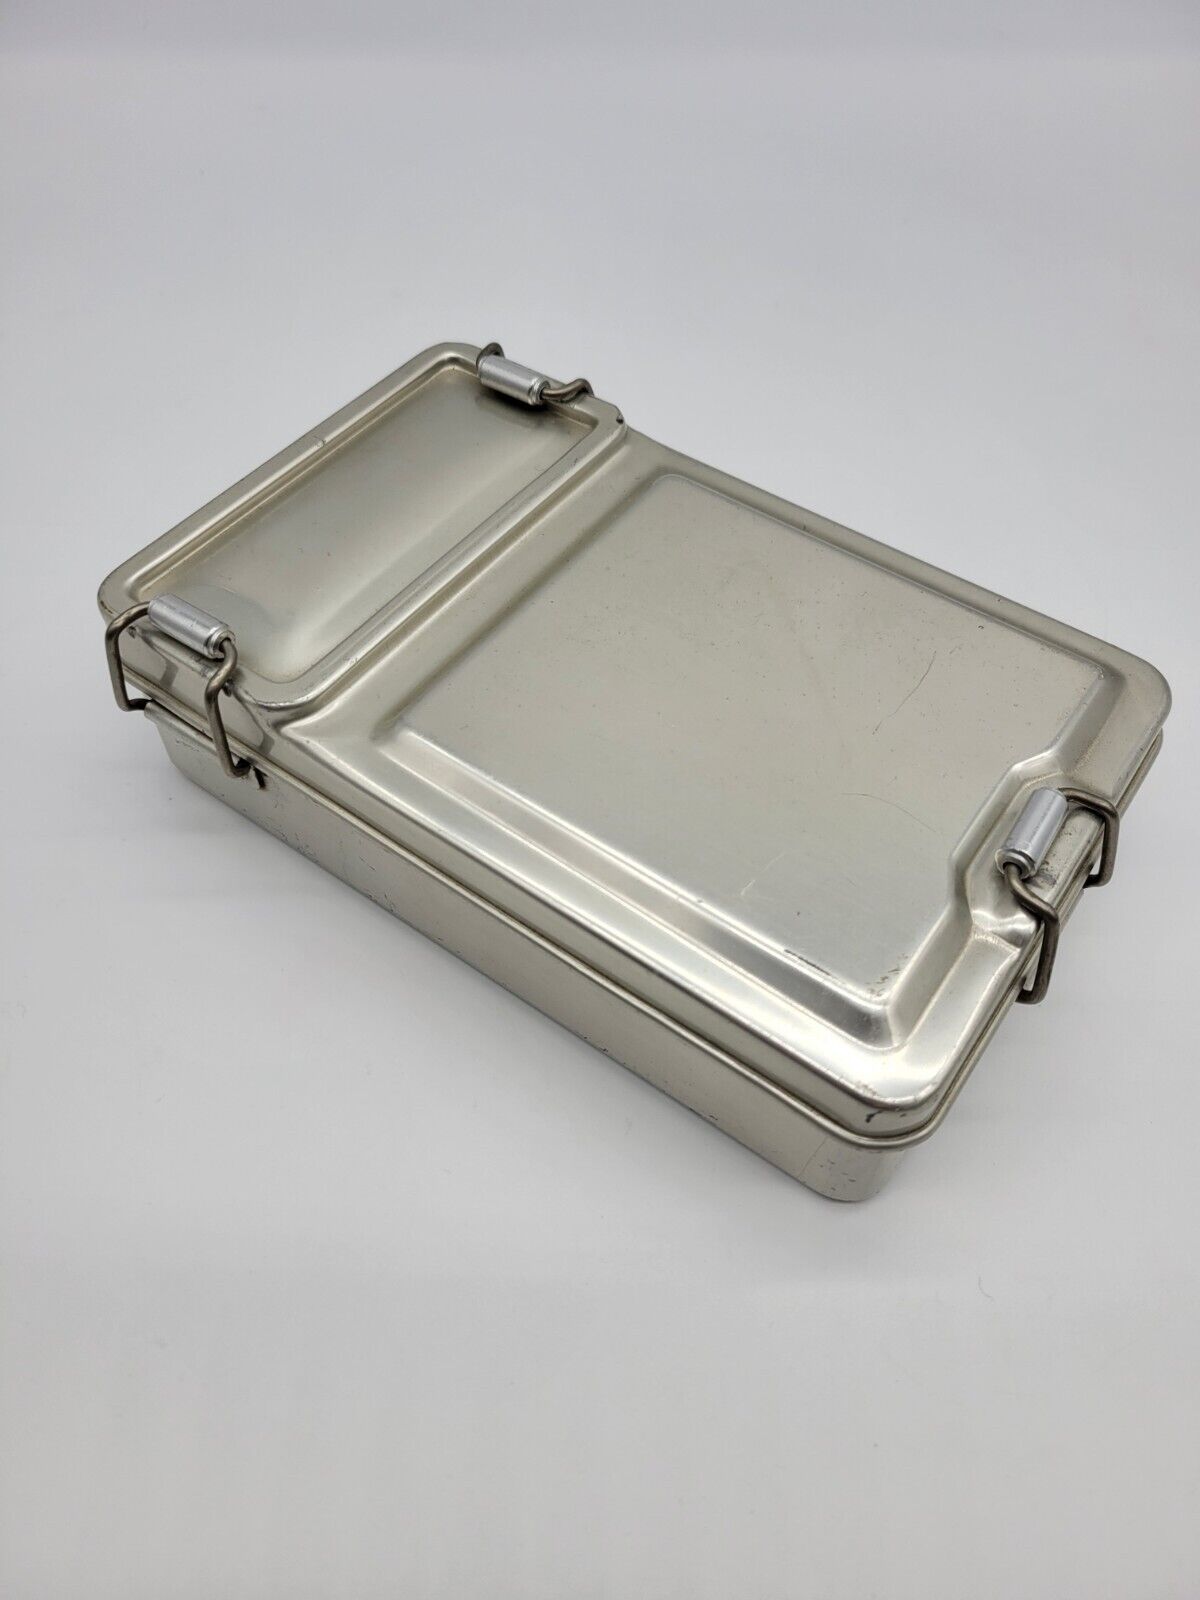 Vintage Japan Airlines Aluminum Lunch Box